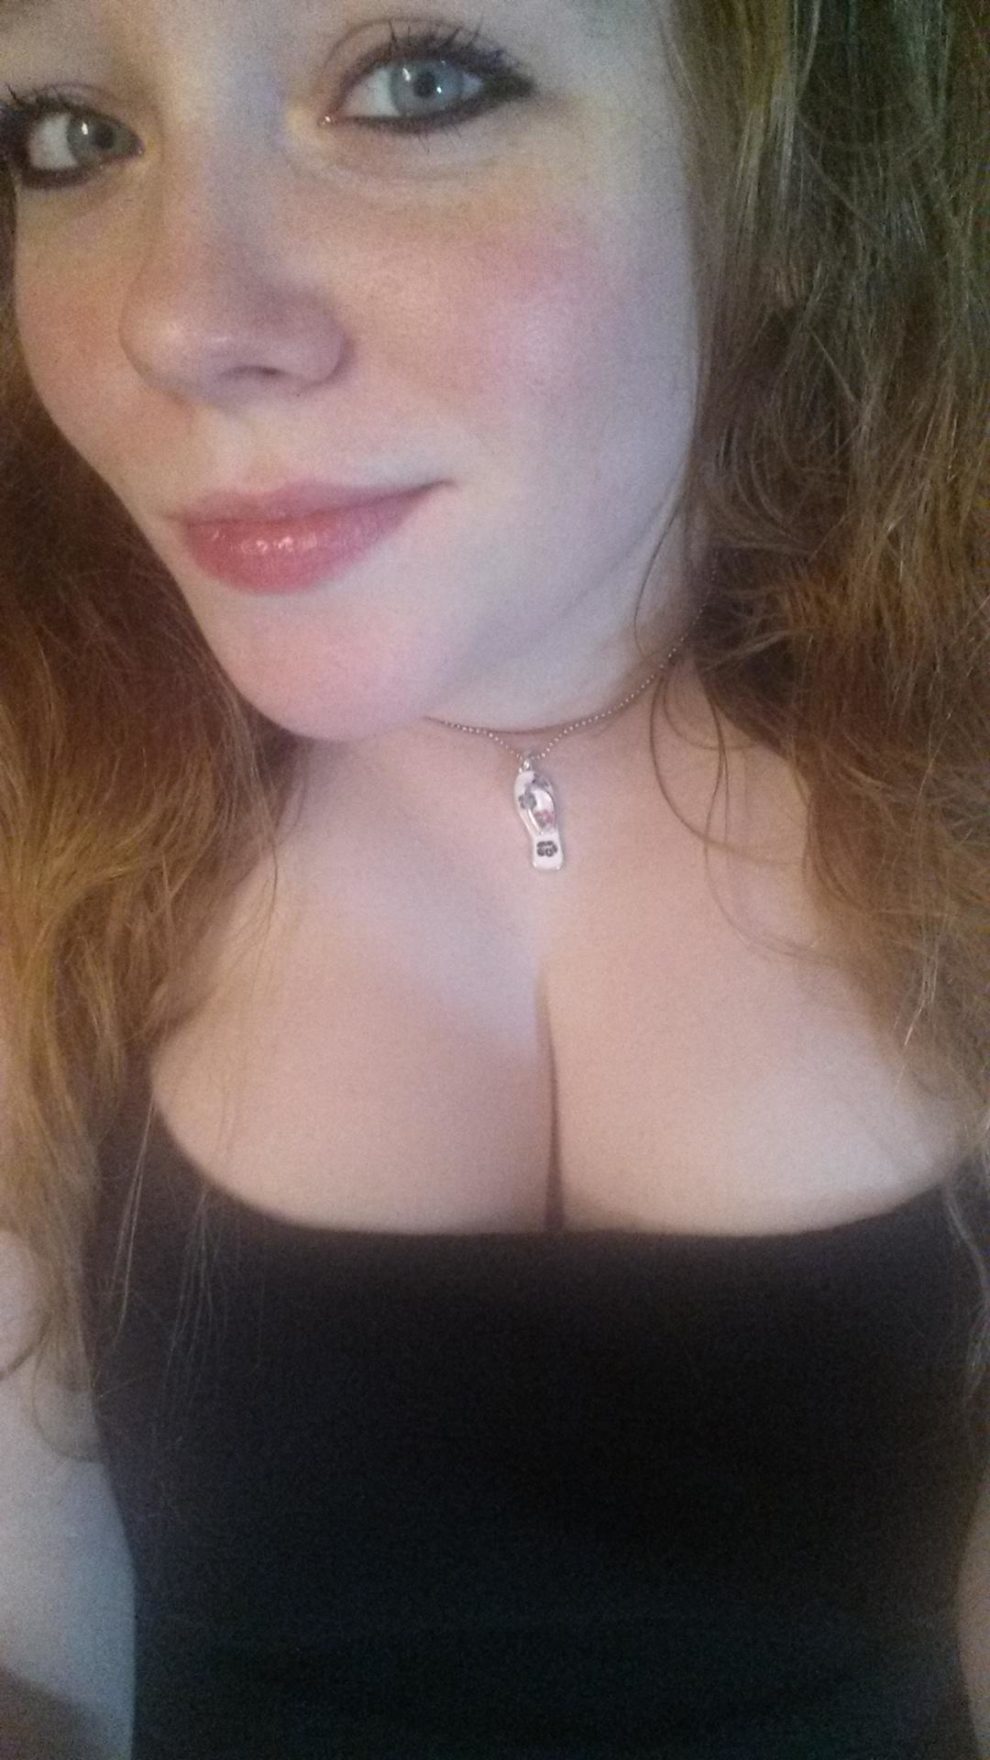 Do you like my flip flop necklace?